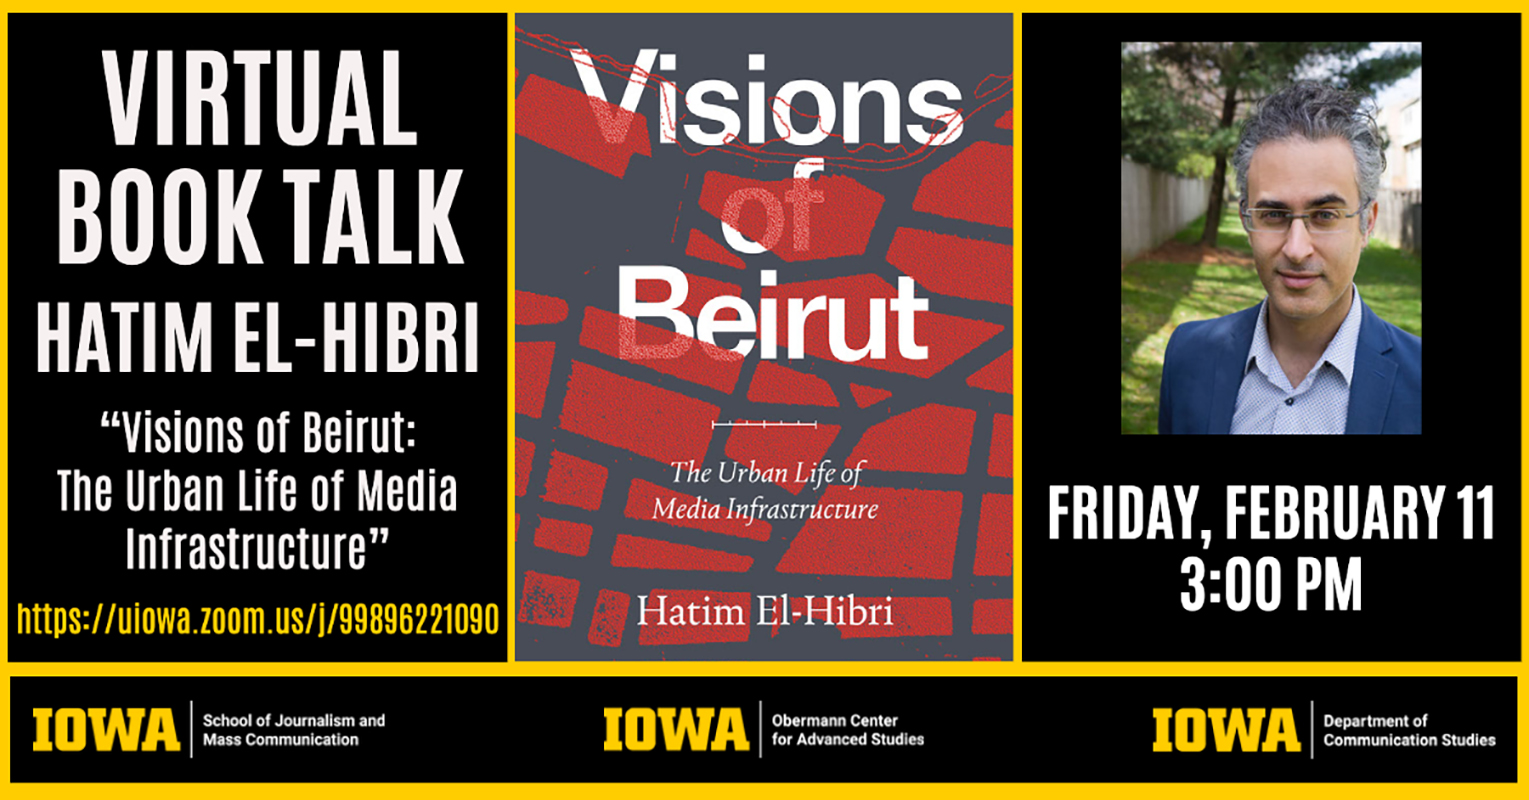 VIrtual Book Talk Hatim El-Hibri Feb 11 at 3:00 PM